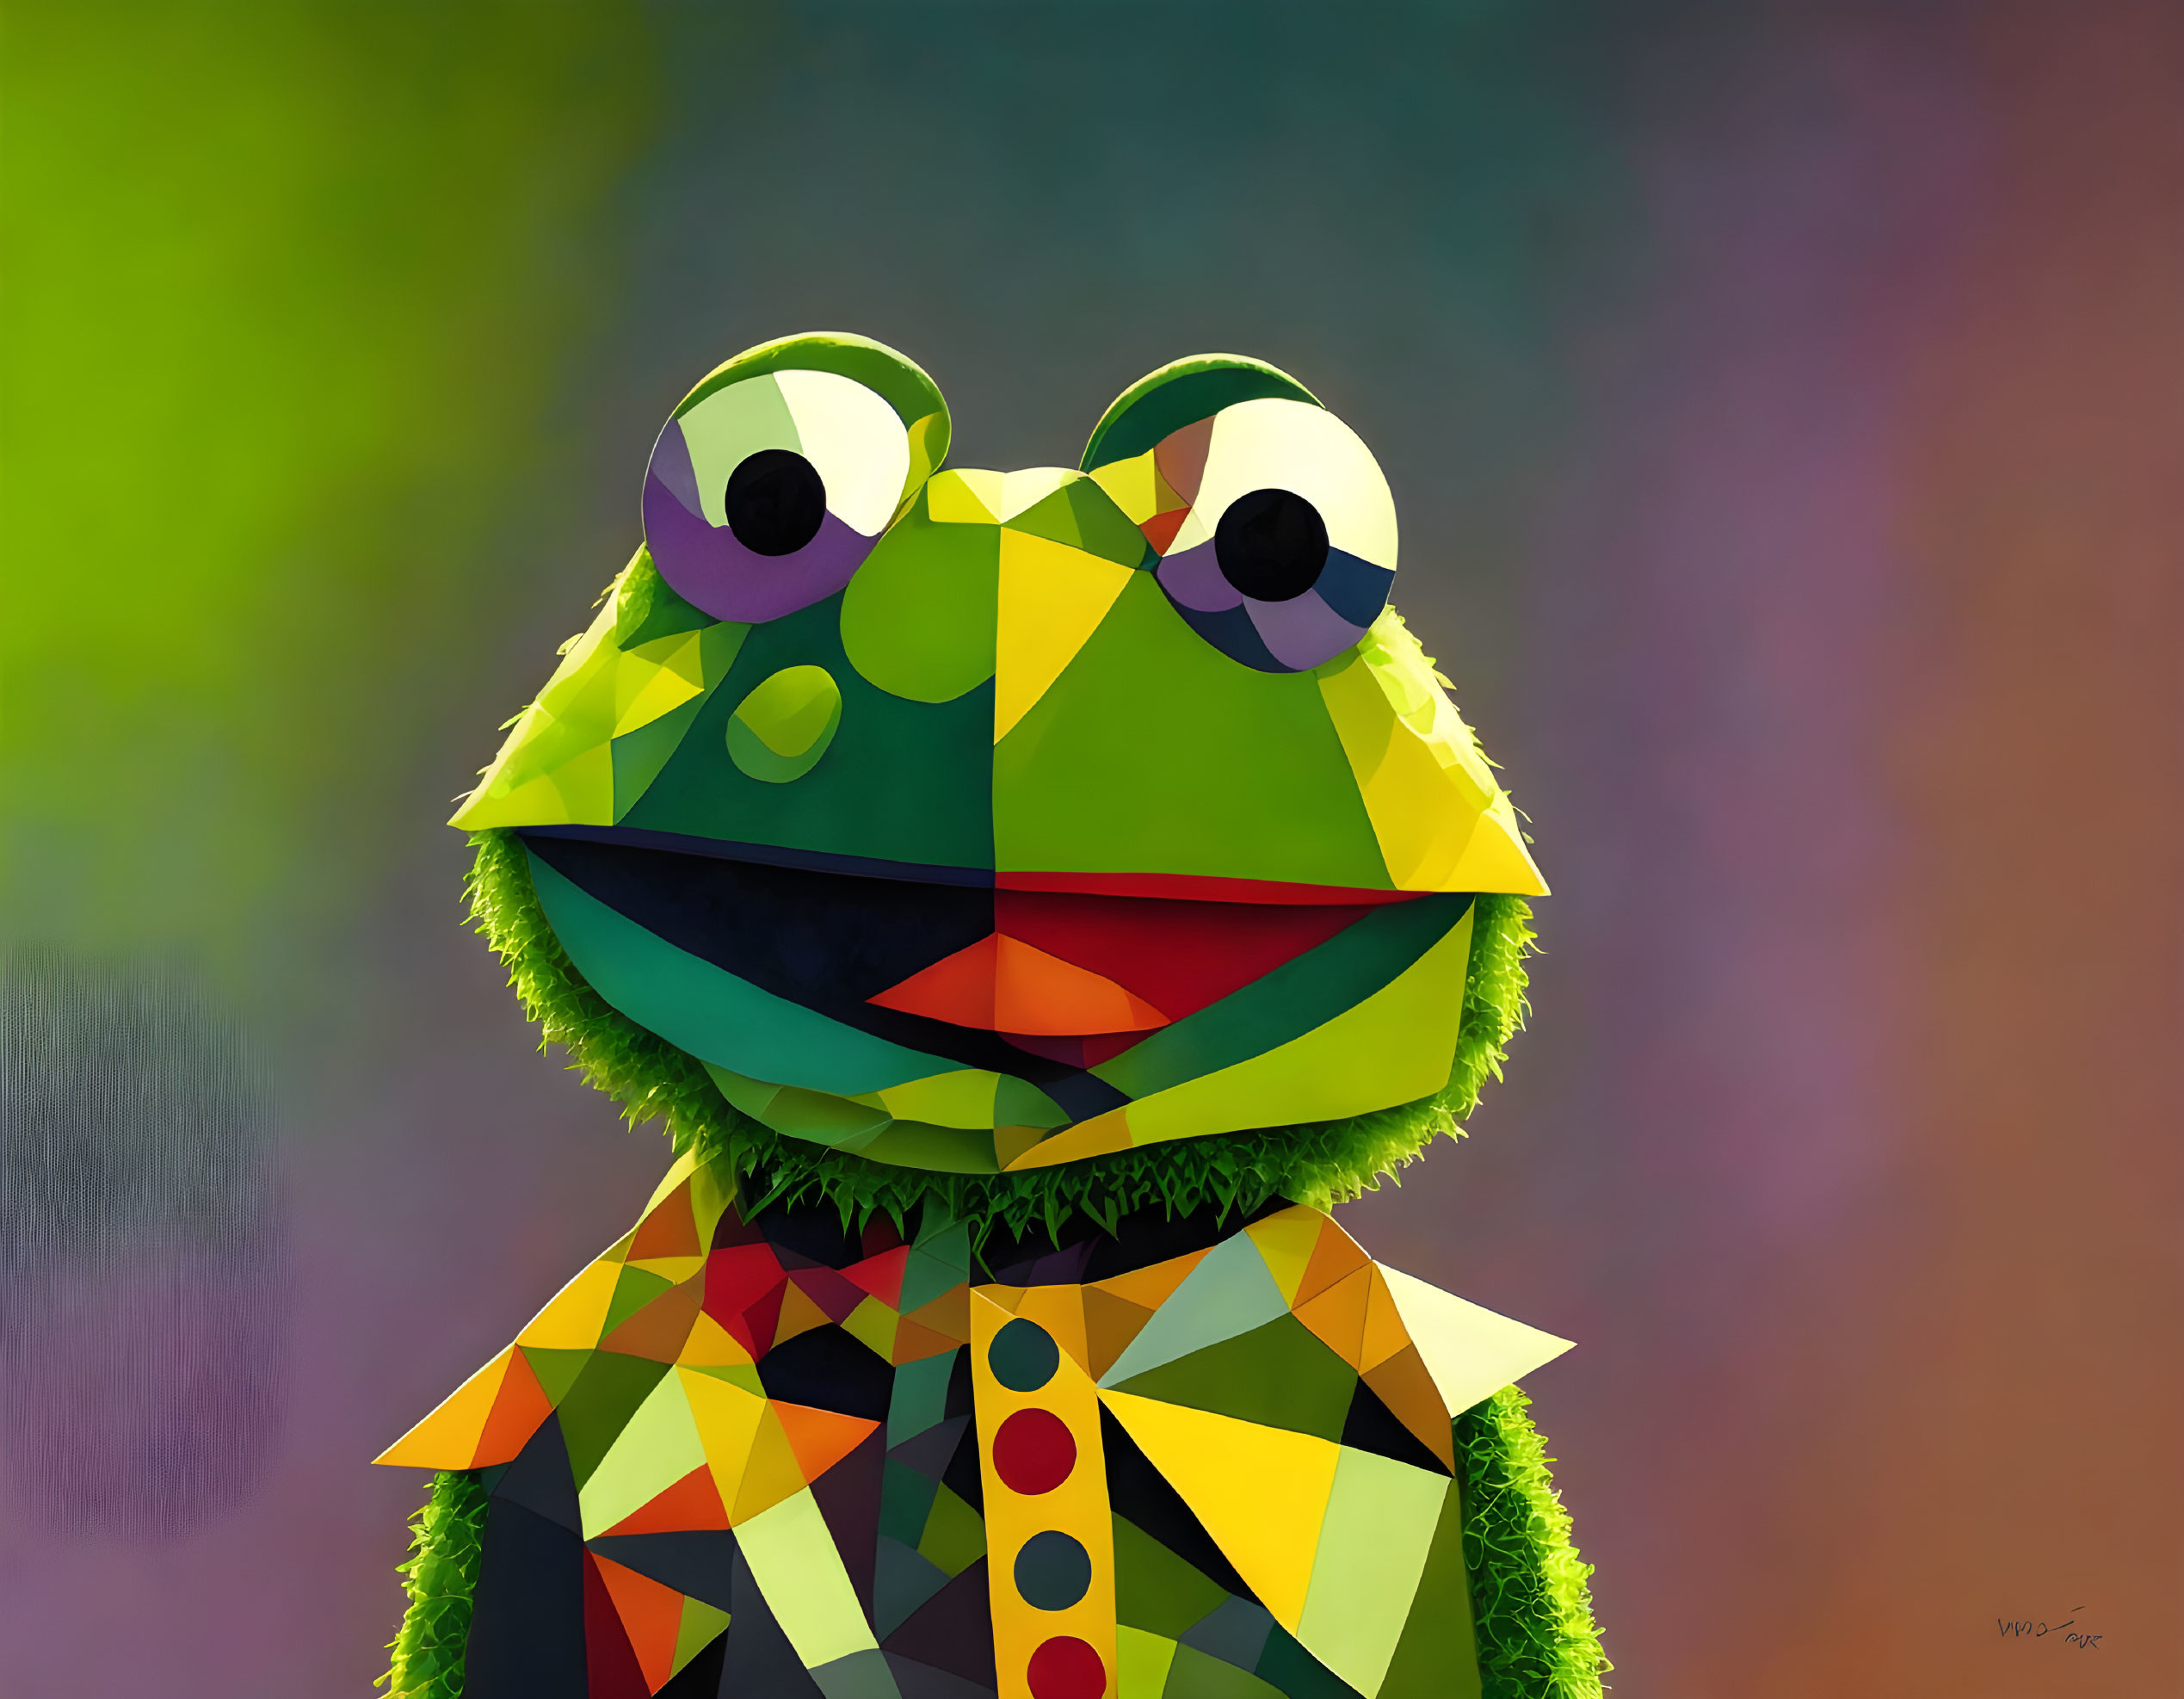 Vibrant geometric Kermit the Frog on blended backdrop